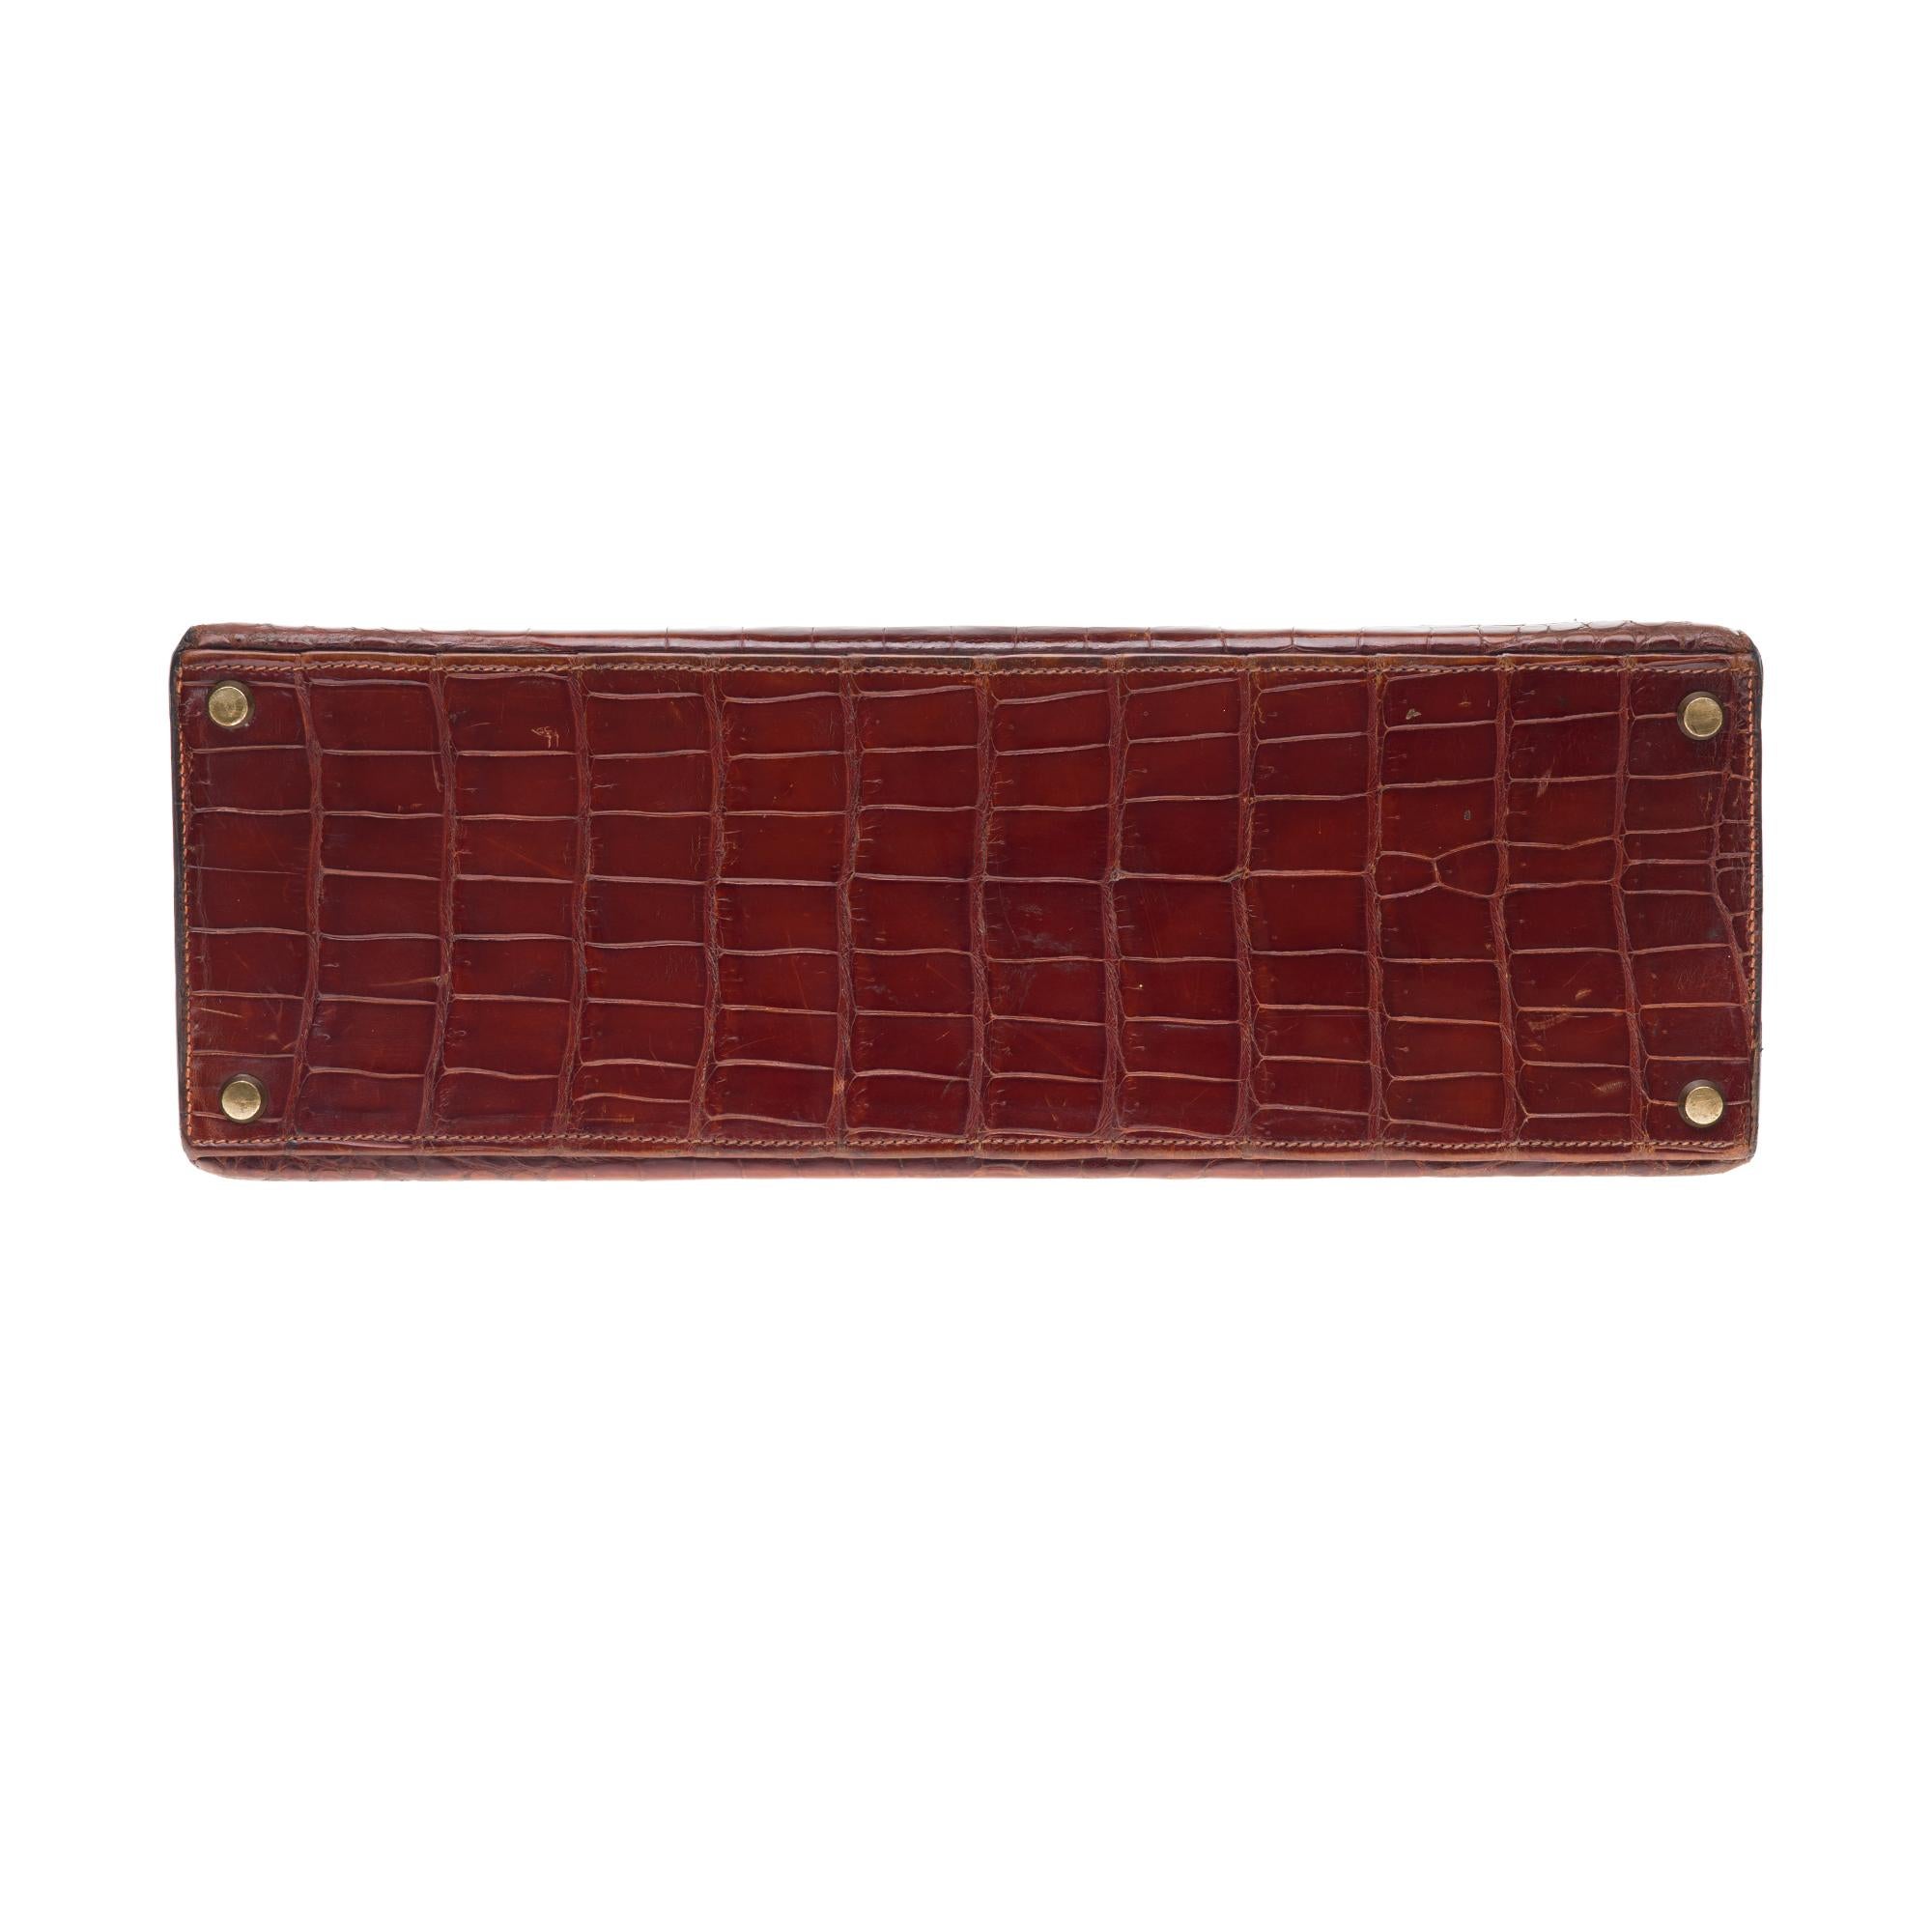 Stunning Hermes Kelly 35 handbag in Brown Crocodile Leather, golden hardware 4